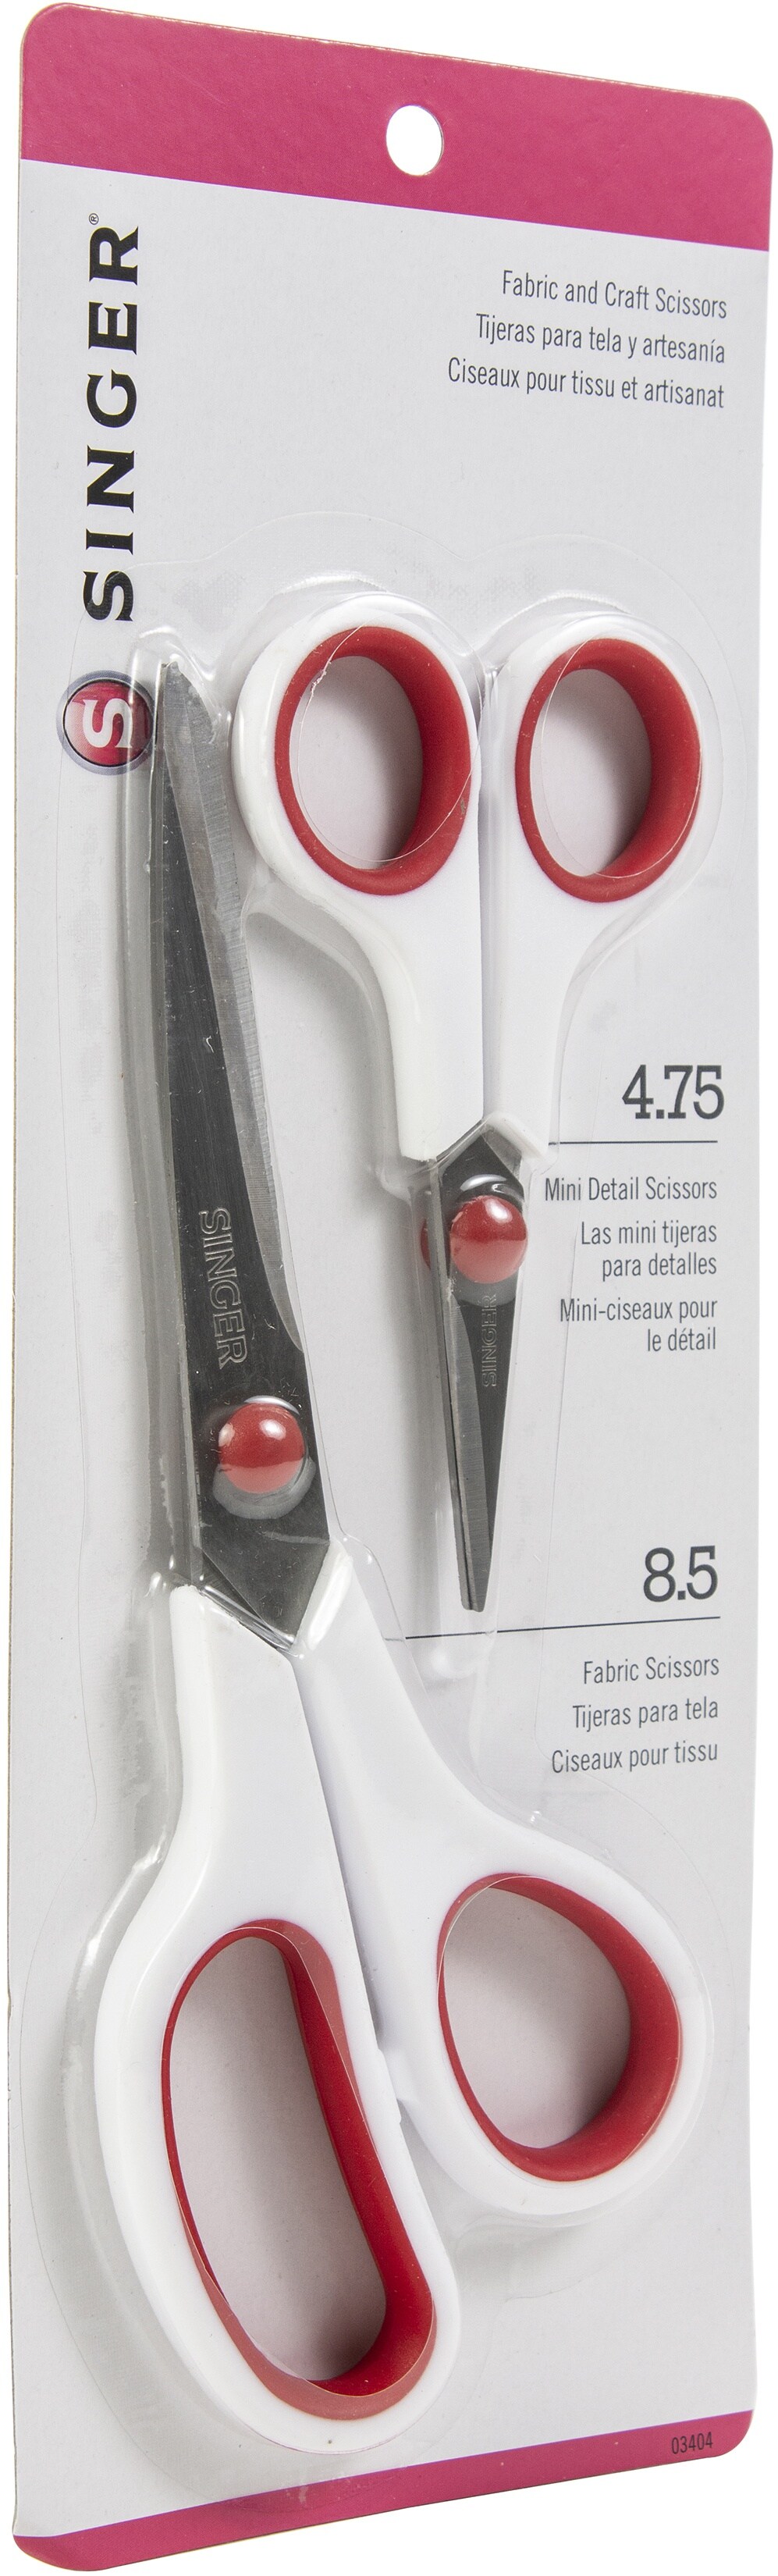 Multipack of 18 - Singer Fabric & Craft Scissors Set W/Comfort Grip  2/Pkg-8.5 Lightweight & 4.75 Detail Scissors